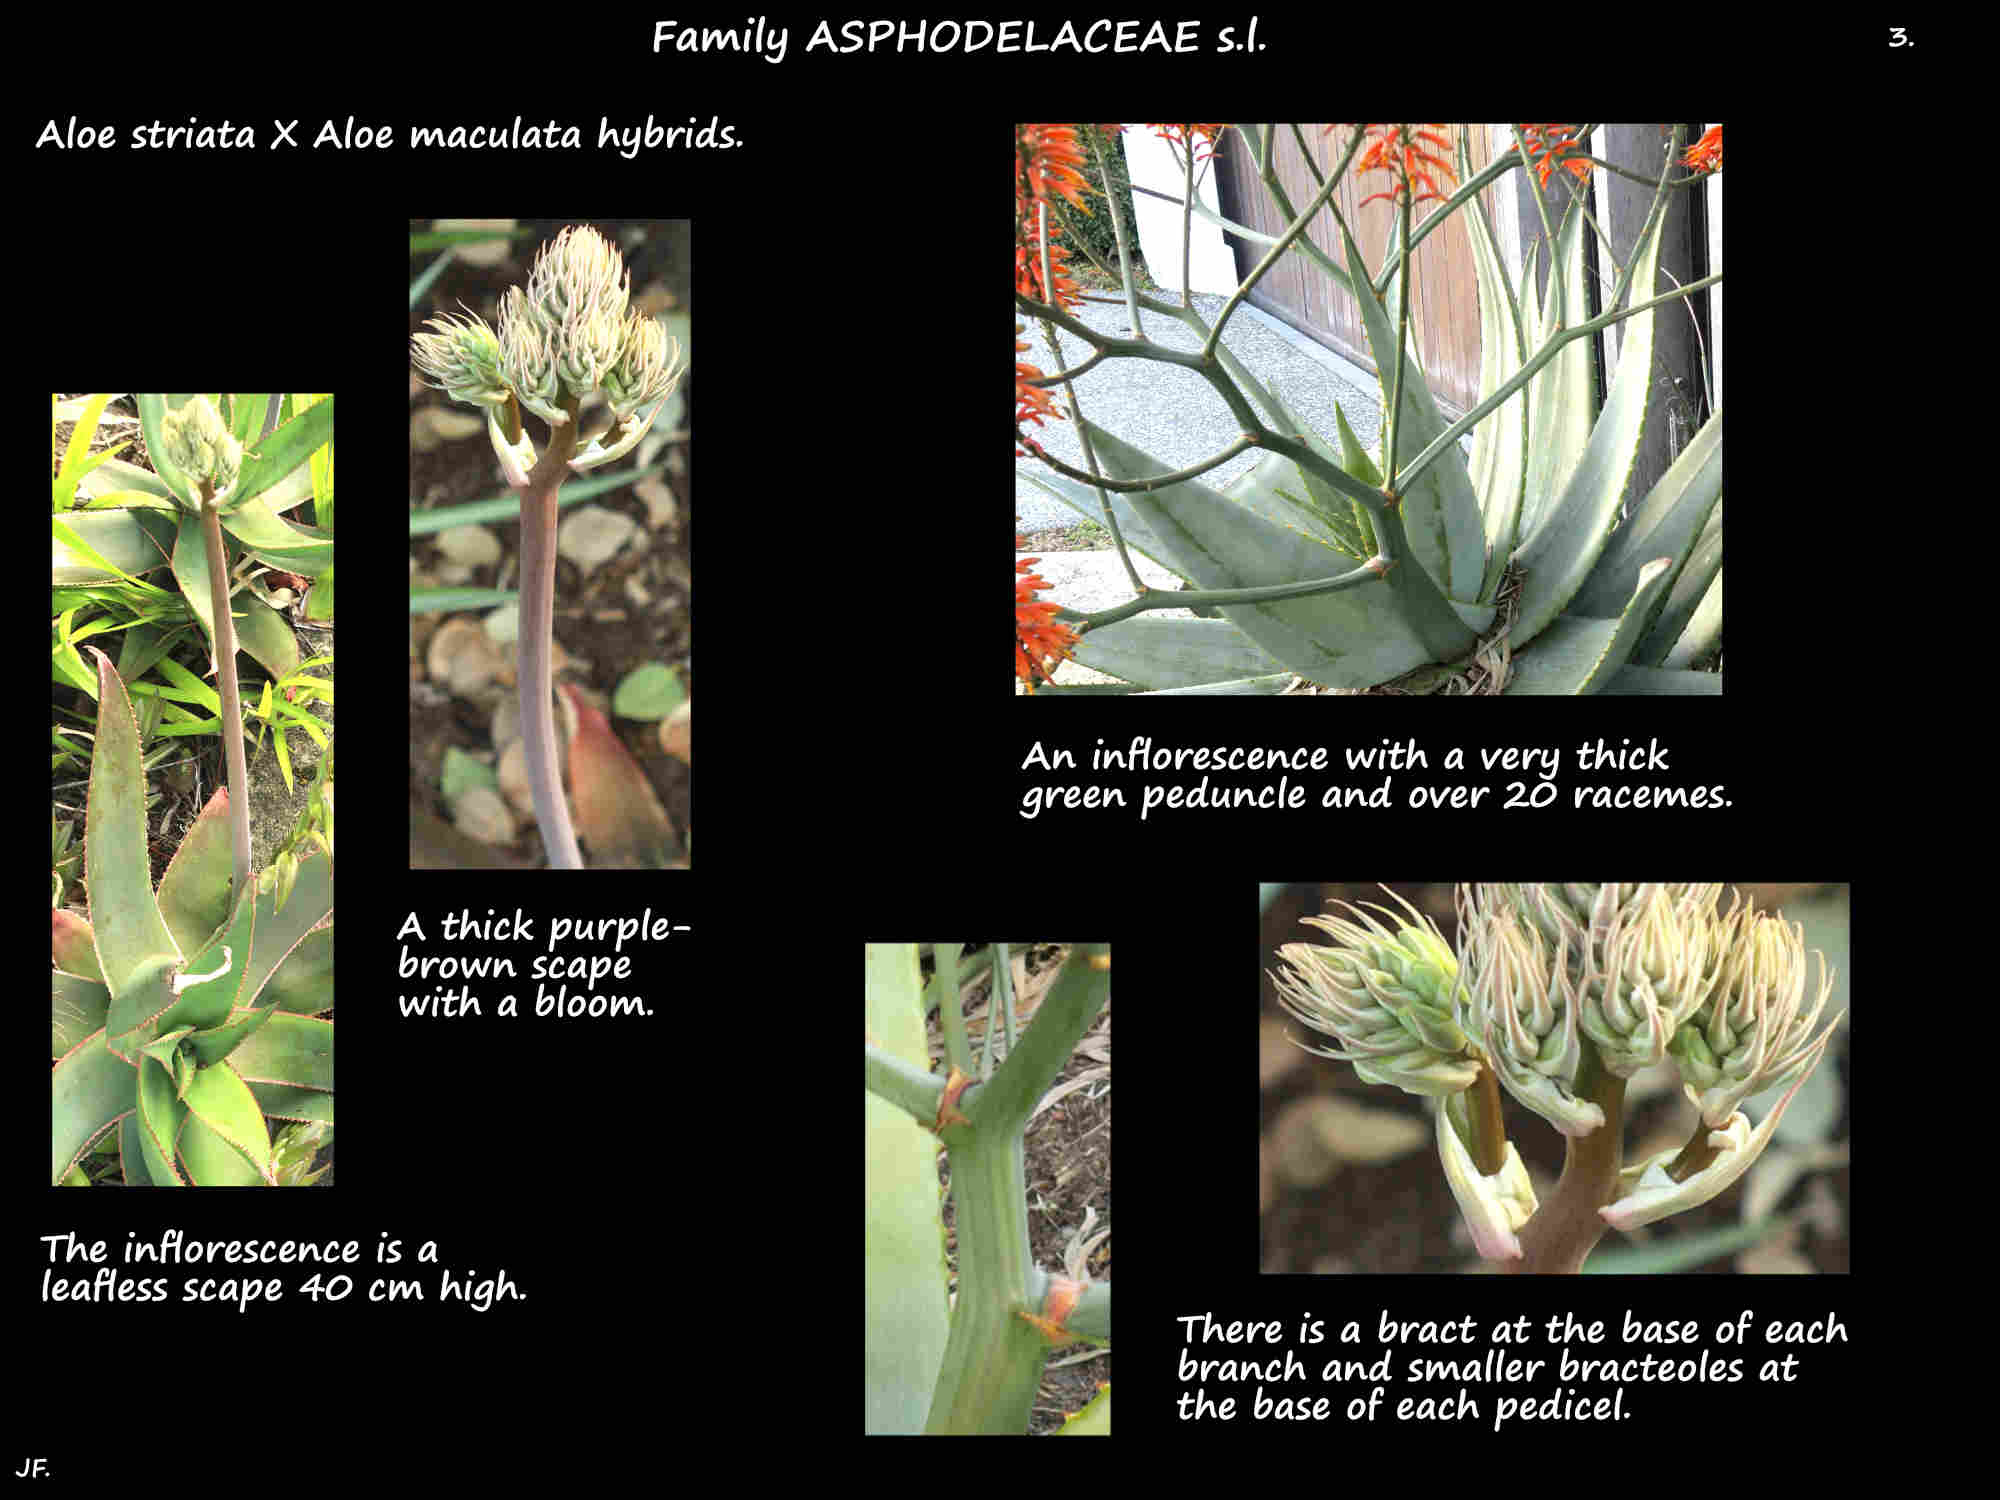 3 Inflorescences & bracts of Aloe striata hybrids